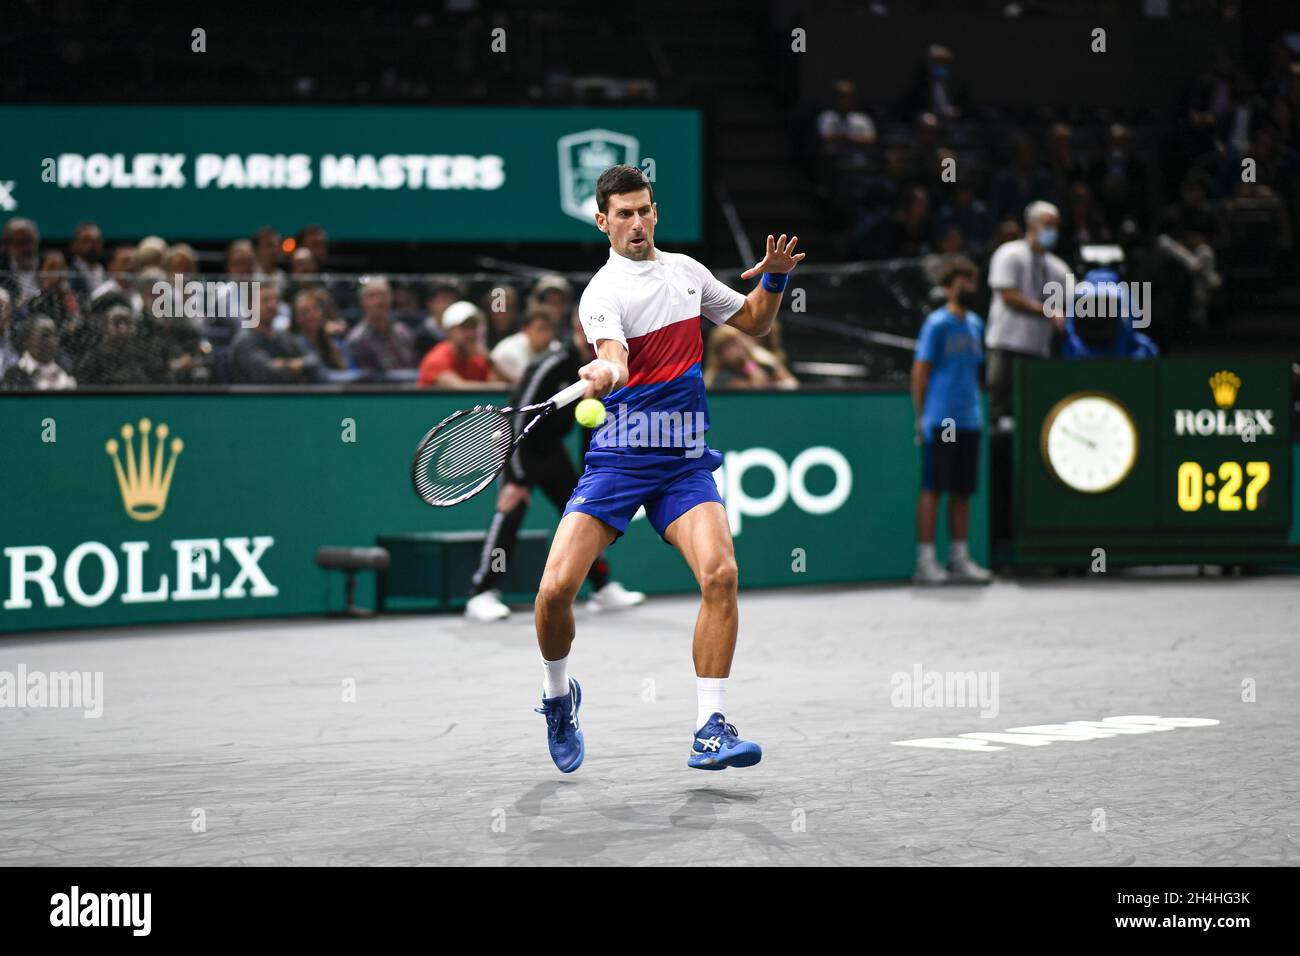 Paris, France, November 2, 2021, Novak Djokovic of Serbia during the Rolex Paris Masters 2021, ATP Masters 1000 tennis tournament, on November 2, 2021 at Accor Arena in Paris, France